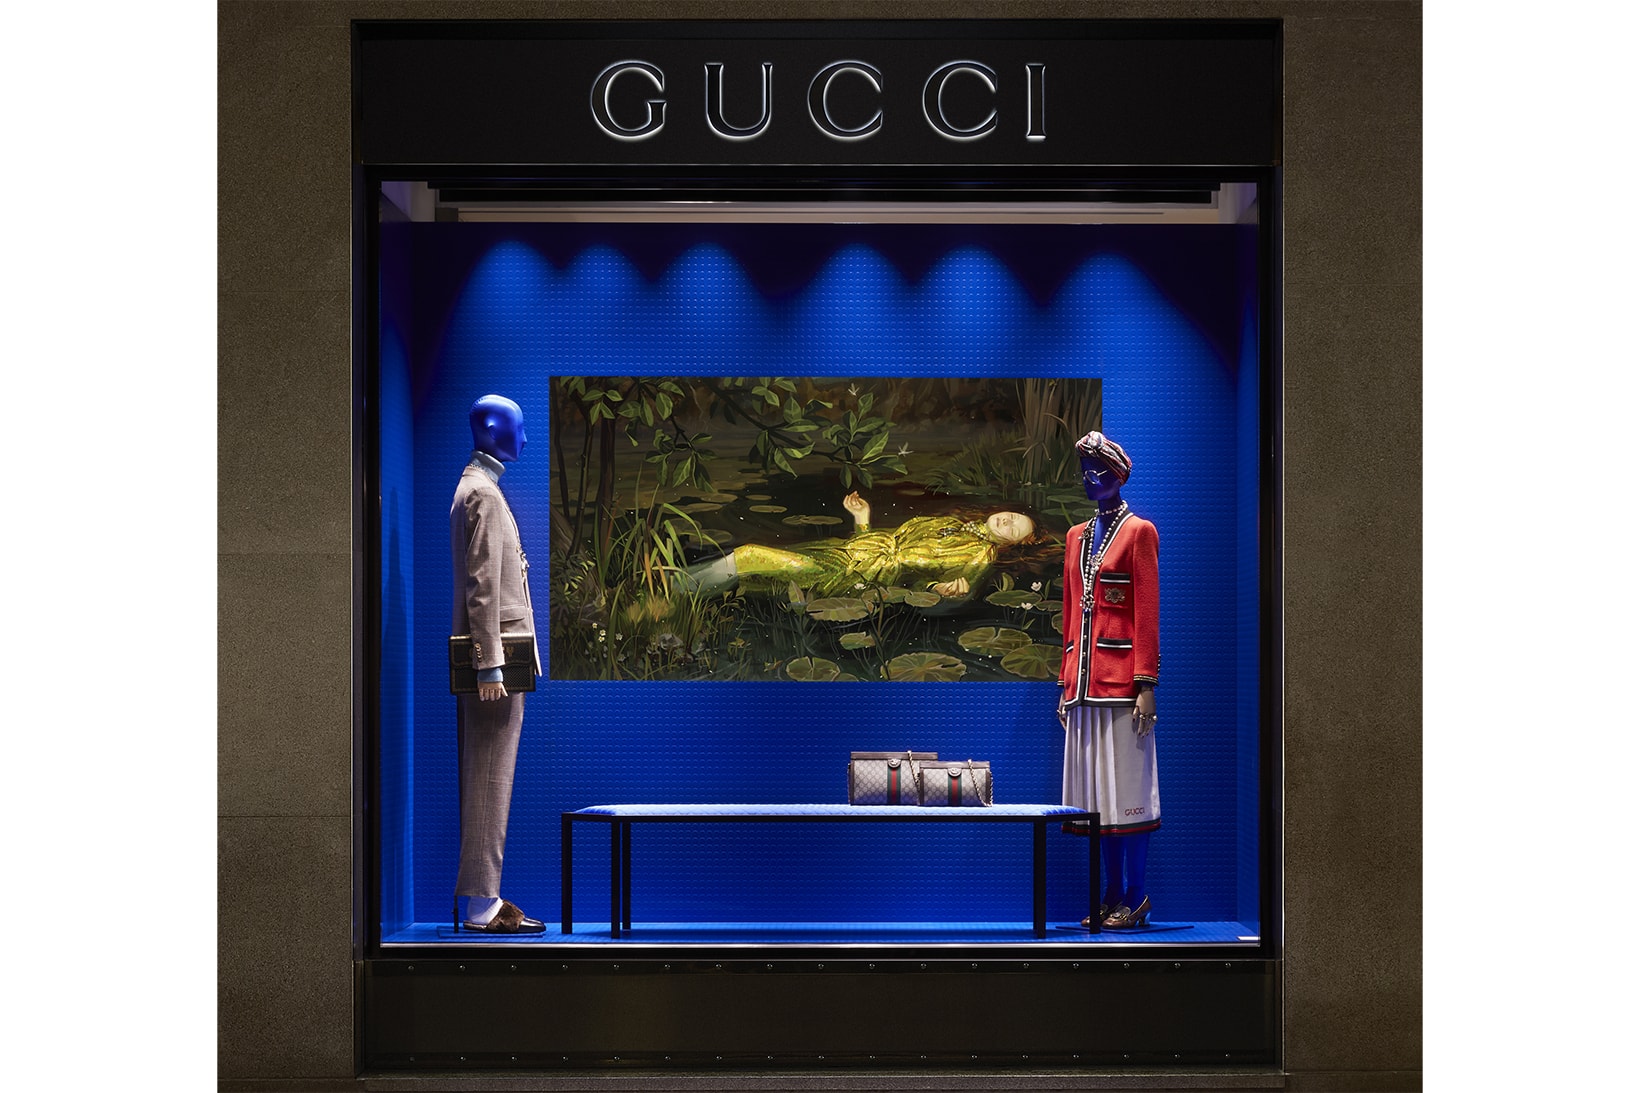 Gucci Ignasi Monreal Spring/Summer 2018 Campaign